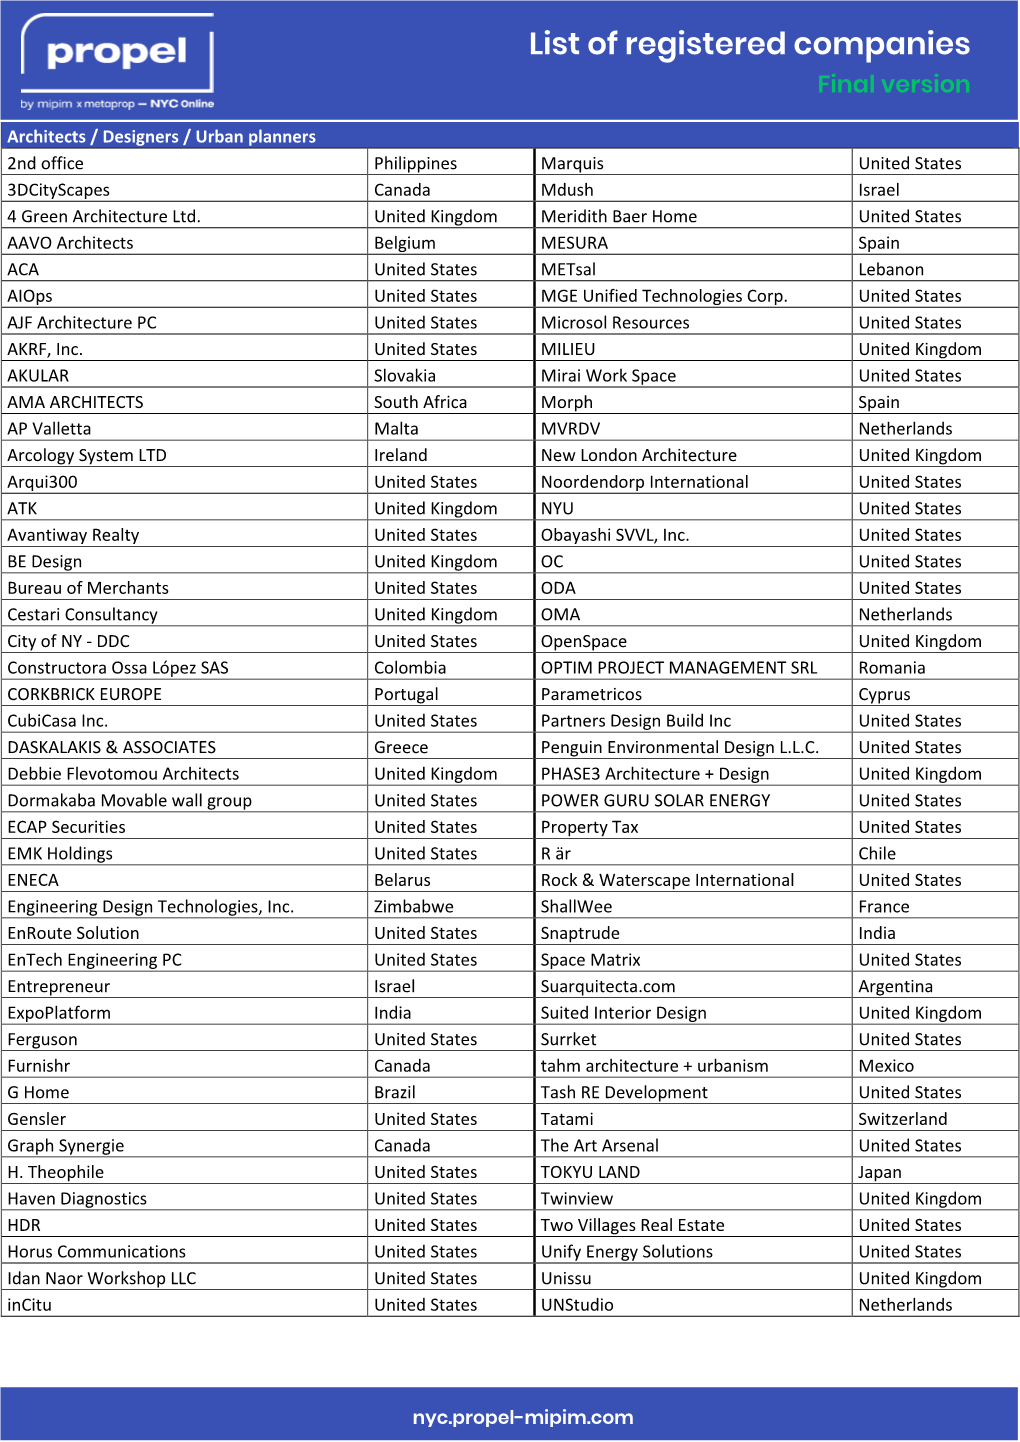 List of Registered Companies